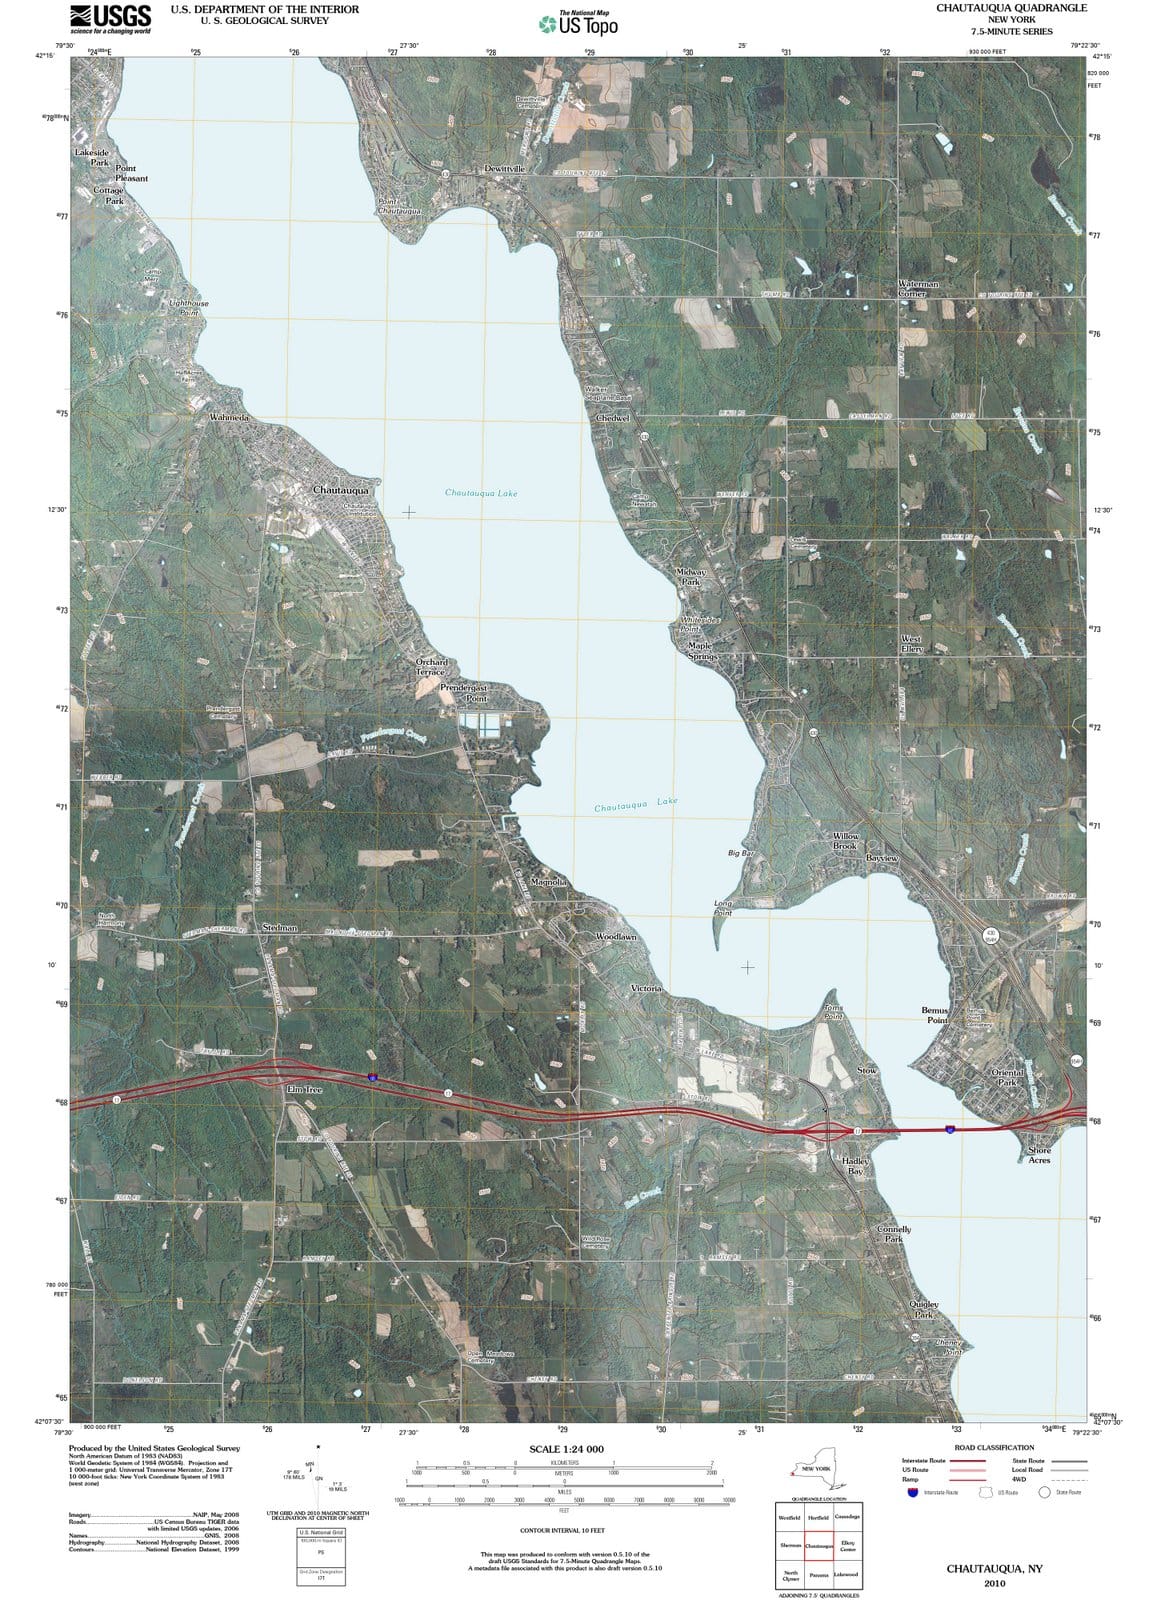 2010 Chautauqua, NY - New York - USGS Topographic Map